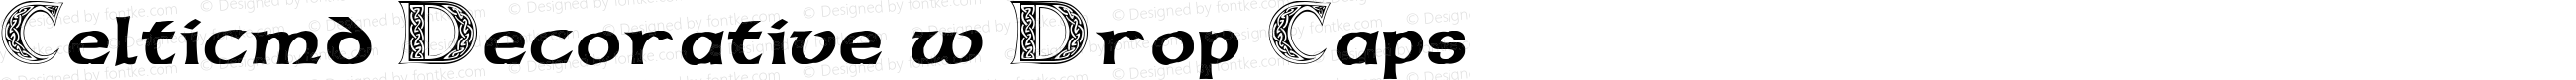 Celticmd Decorative w Drop Caps